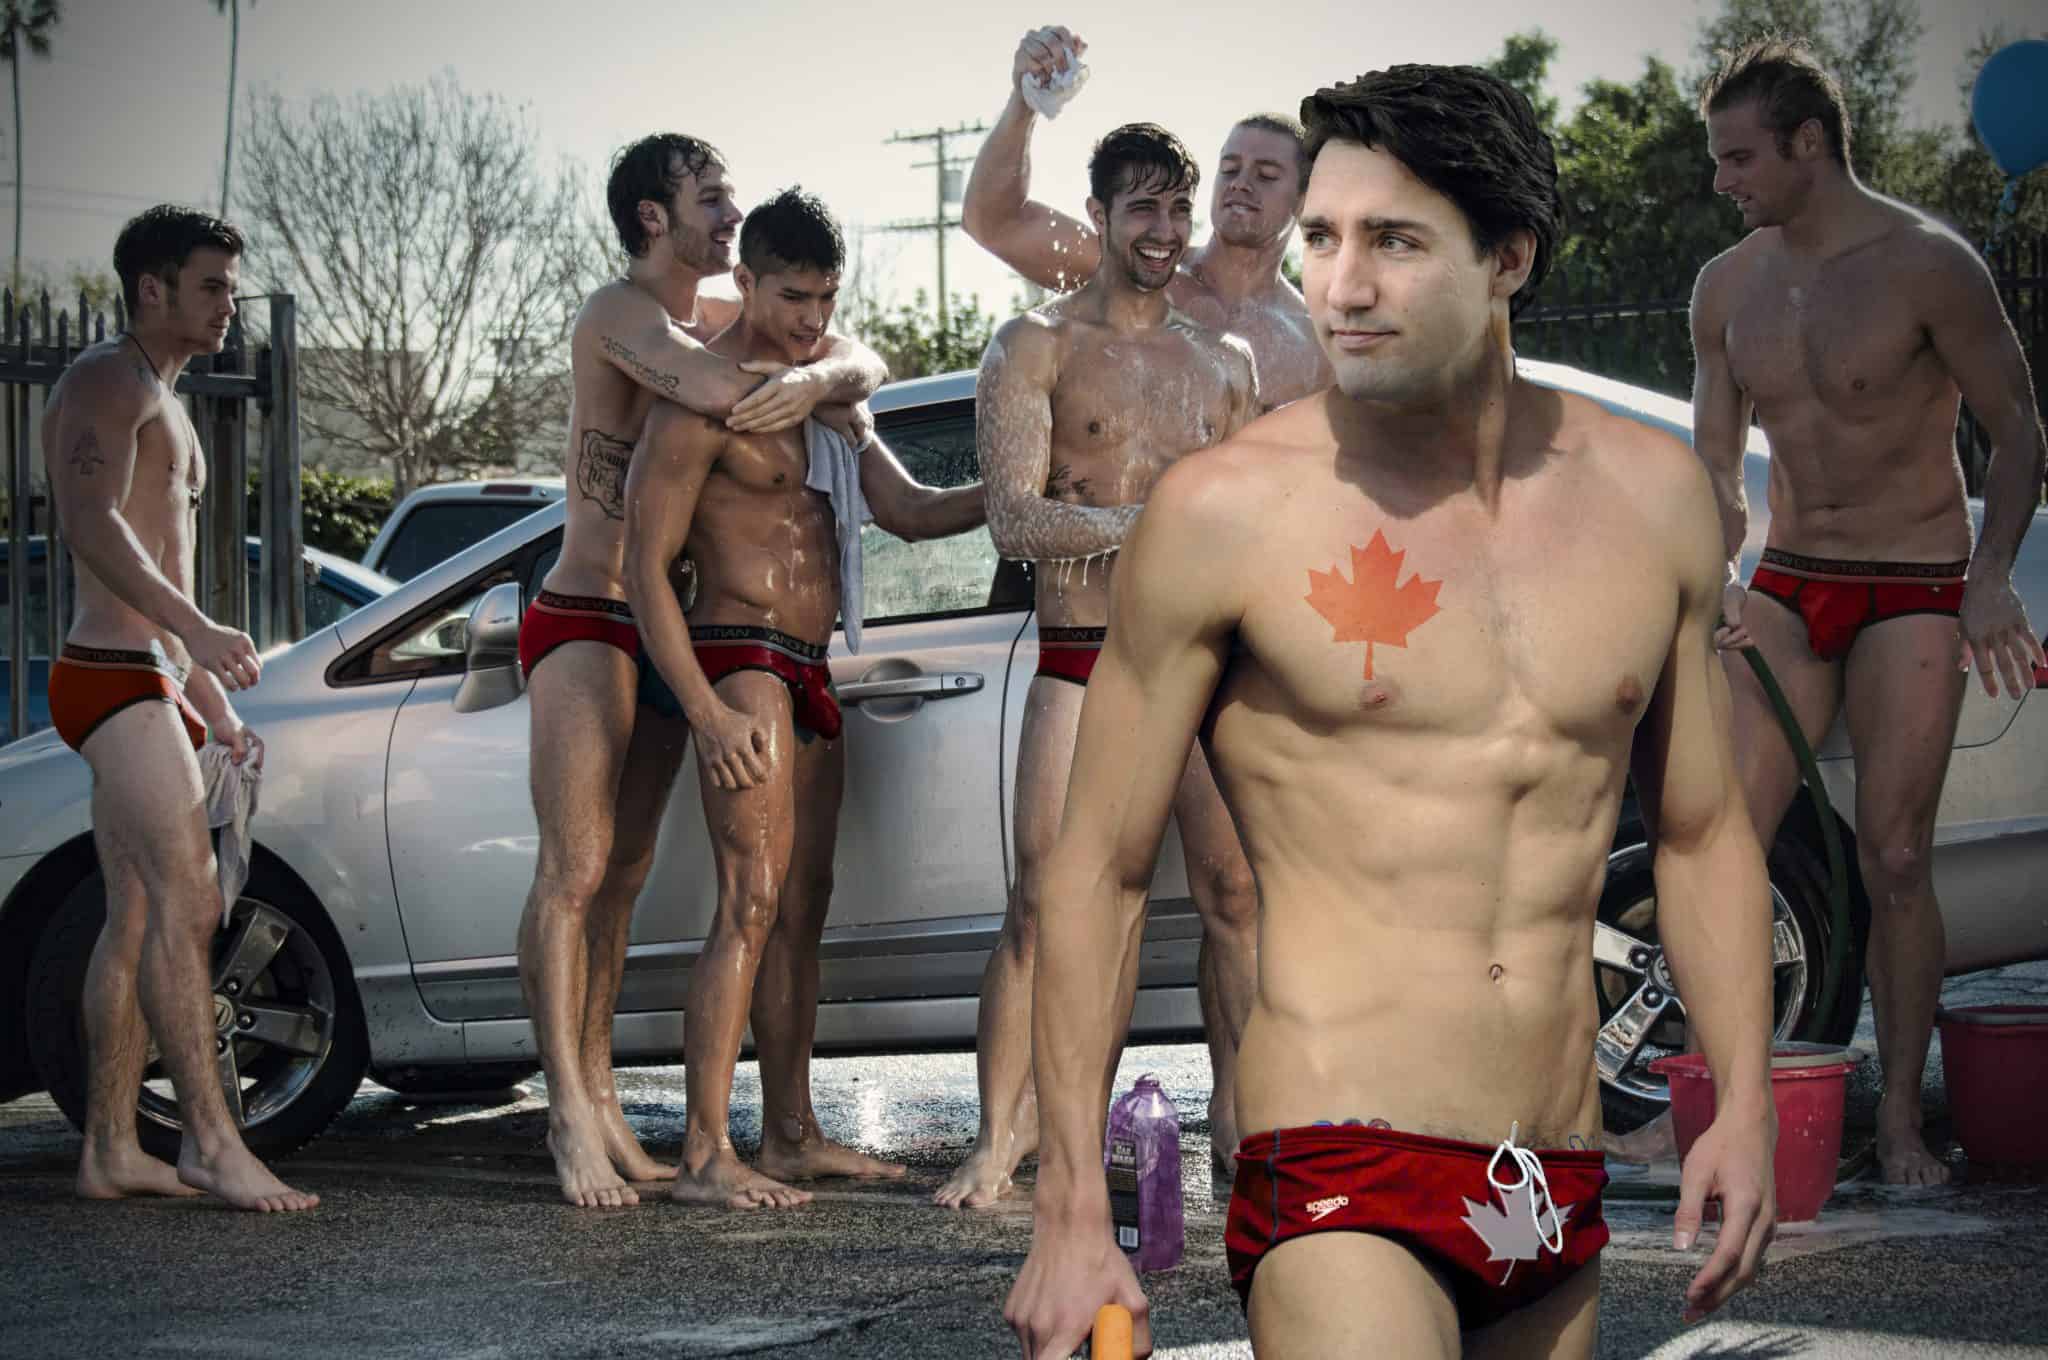 Canadian PM Justin Trudeau Organizes Sexy Car Wash To Address Budget Shortf...